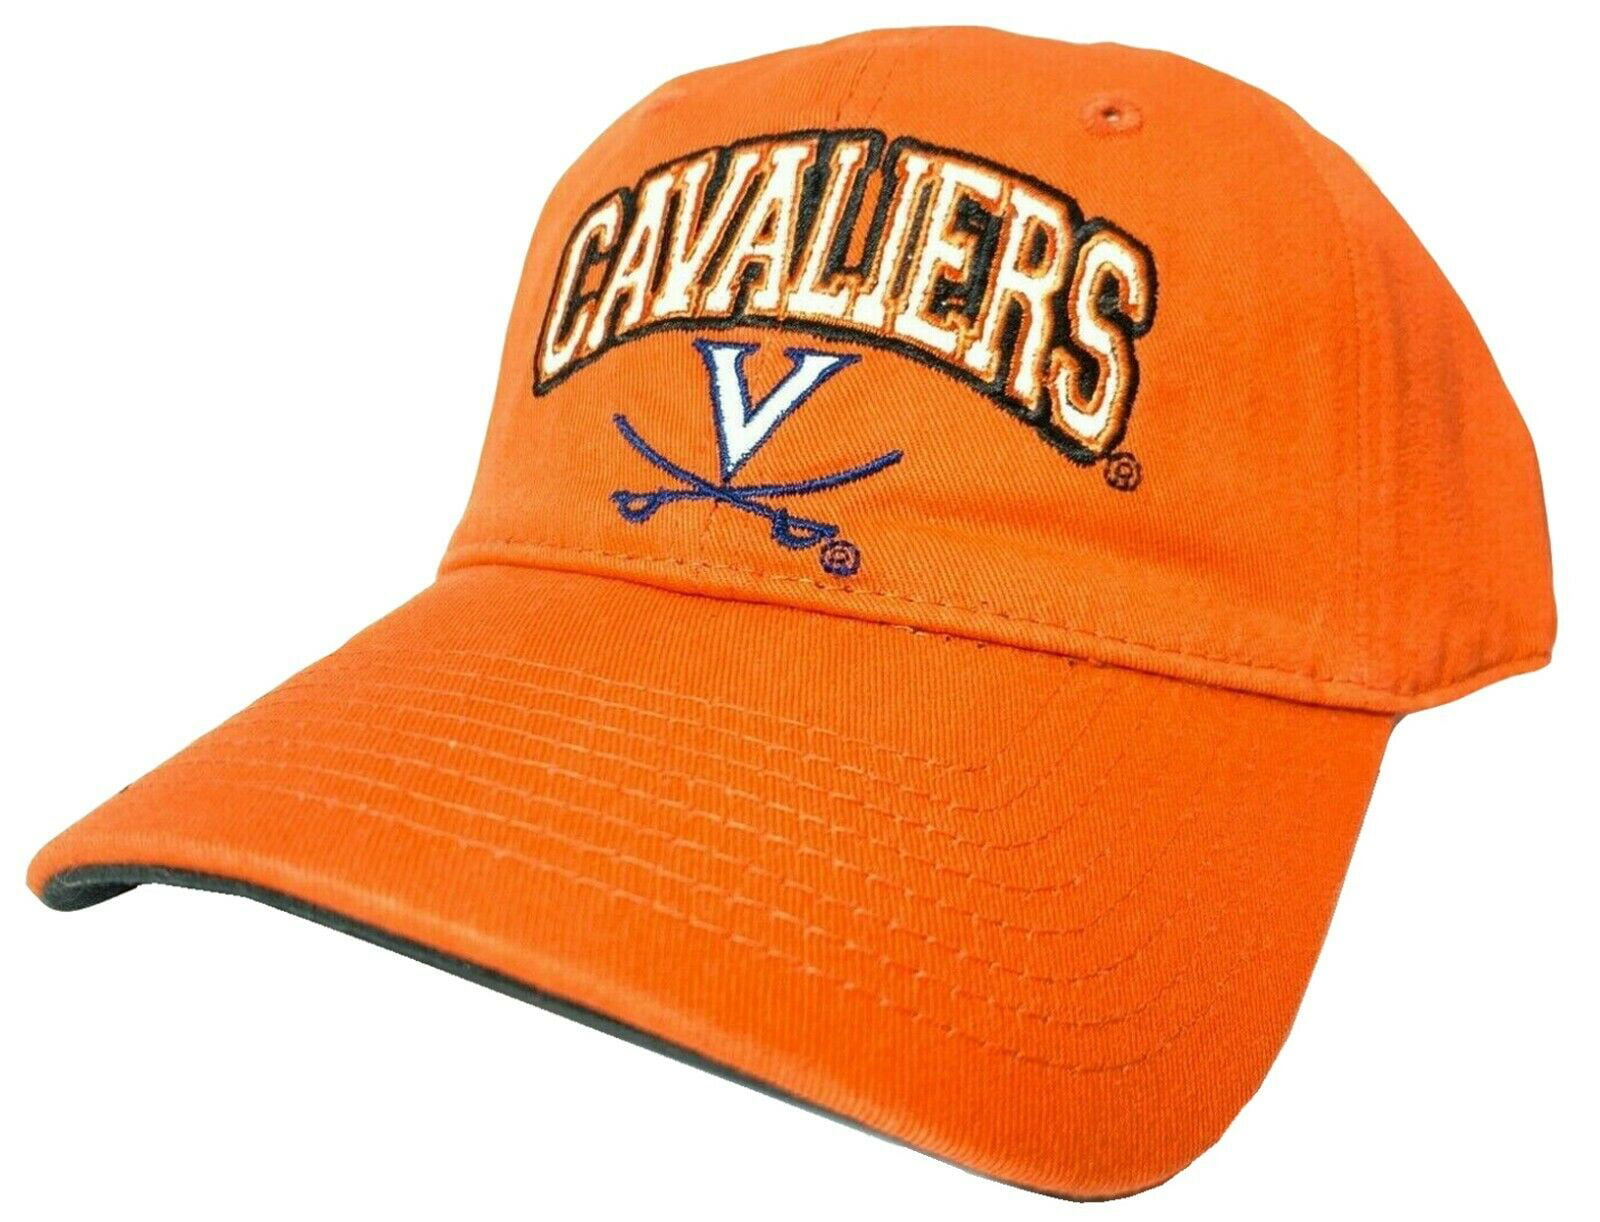 New University of Virginia Cavaliers Adjustable Buckle Back Hat Embroidered Cap 